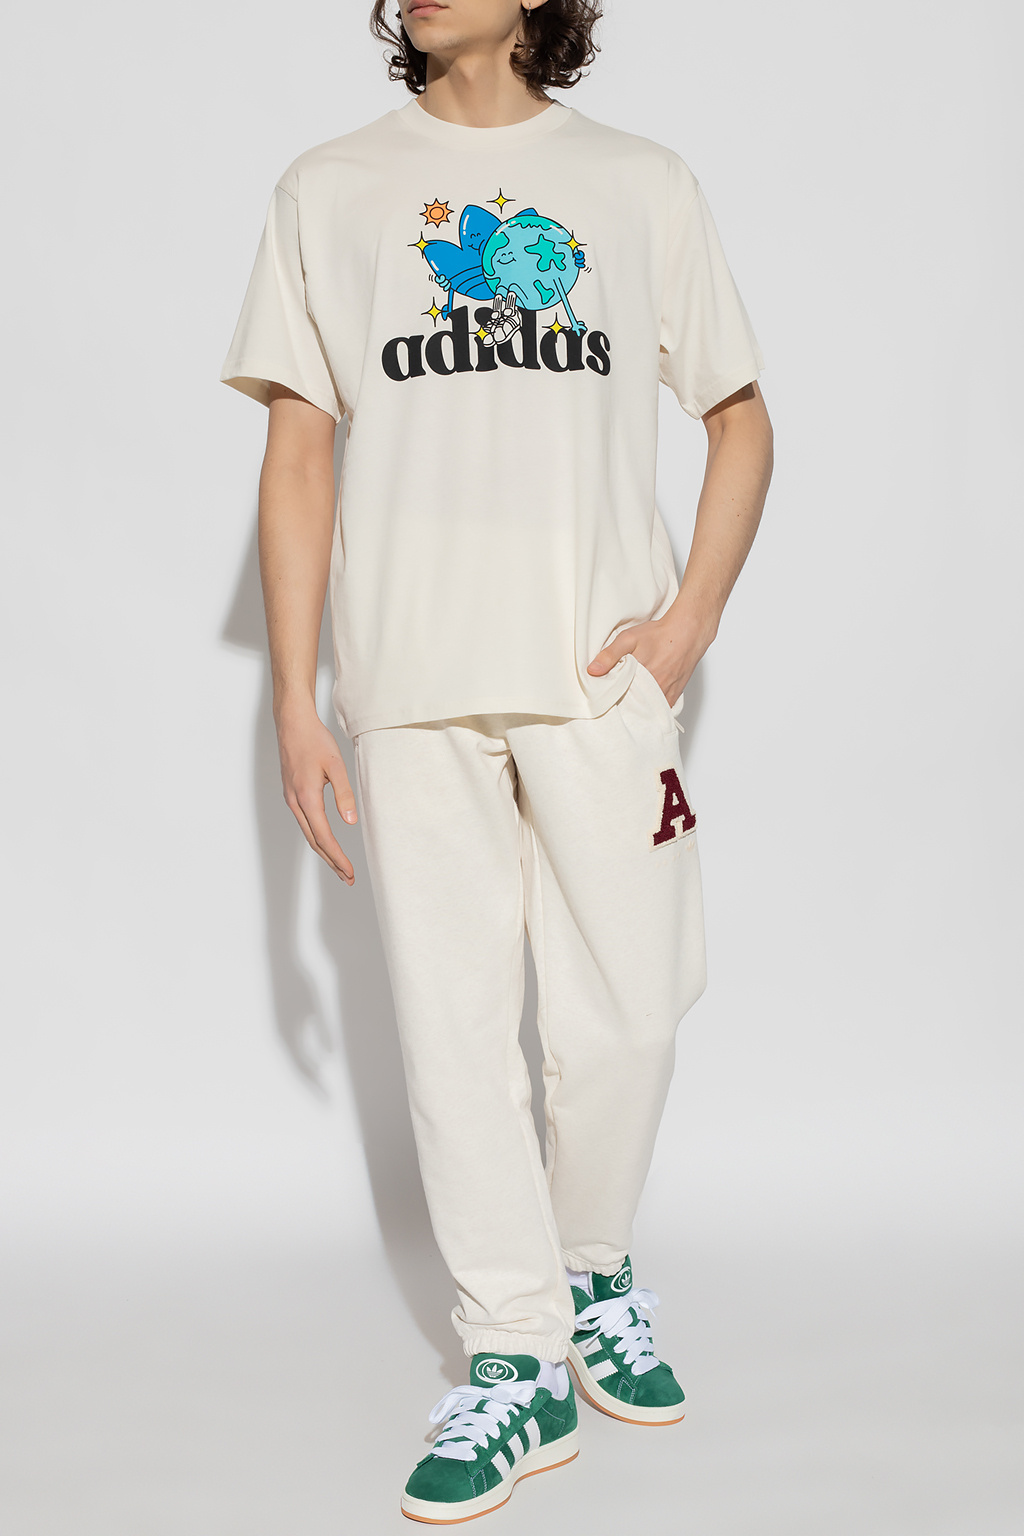 shirt ADIDAS dame Originals - Cream Printed T - IetpShops - espadrille adidas dame femme 2017 forum